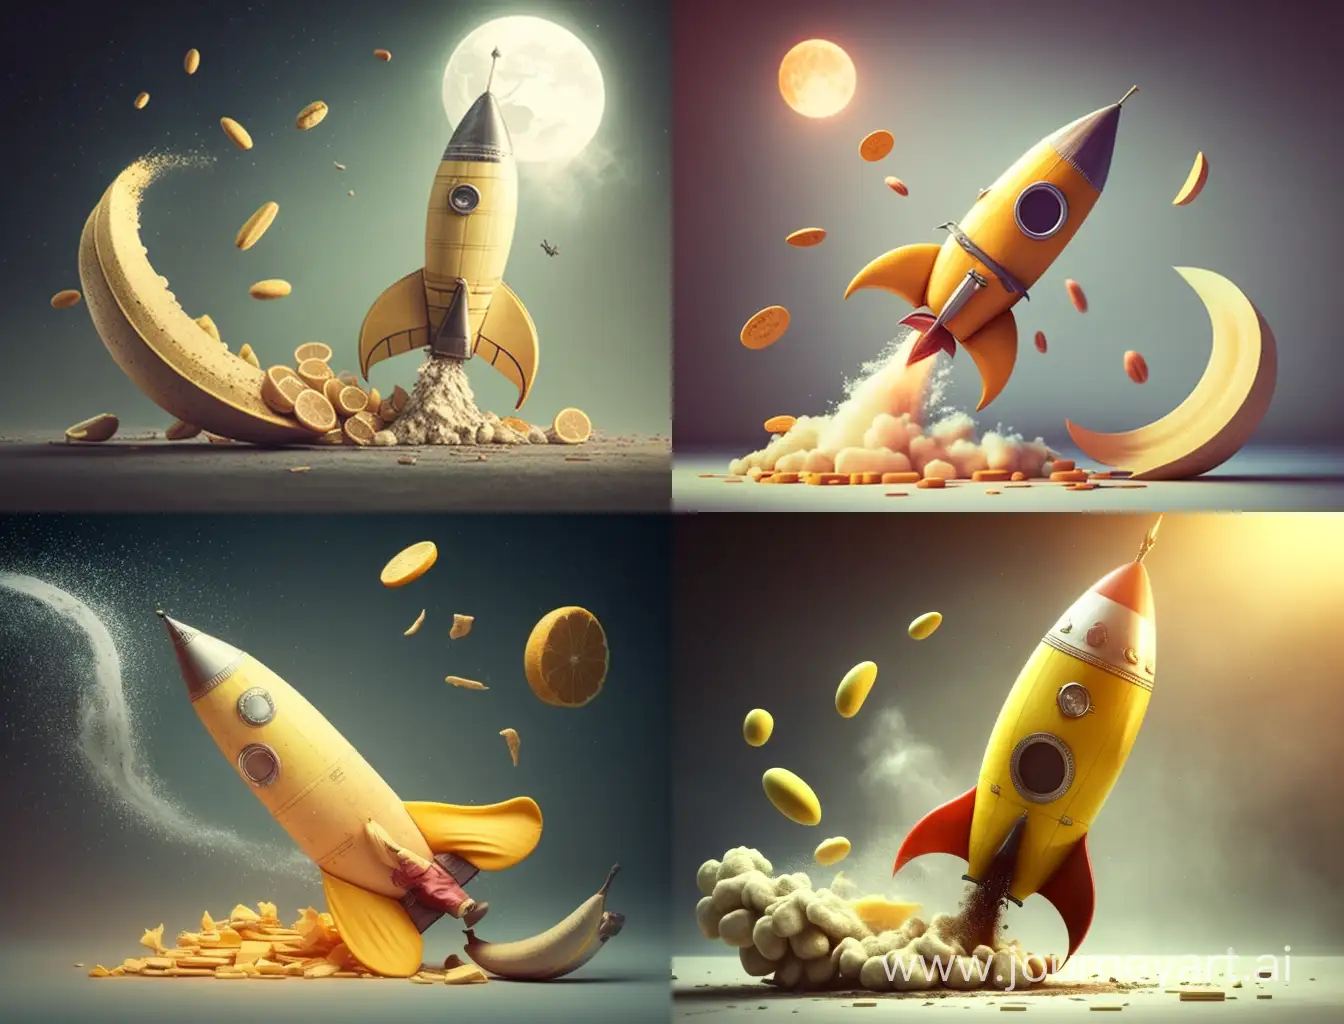 Banana-Riding-a-Rocket-with-Falling-Coins-Illustration